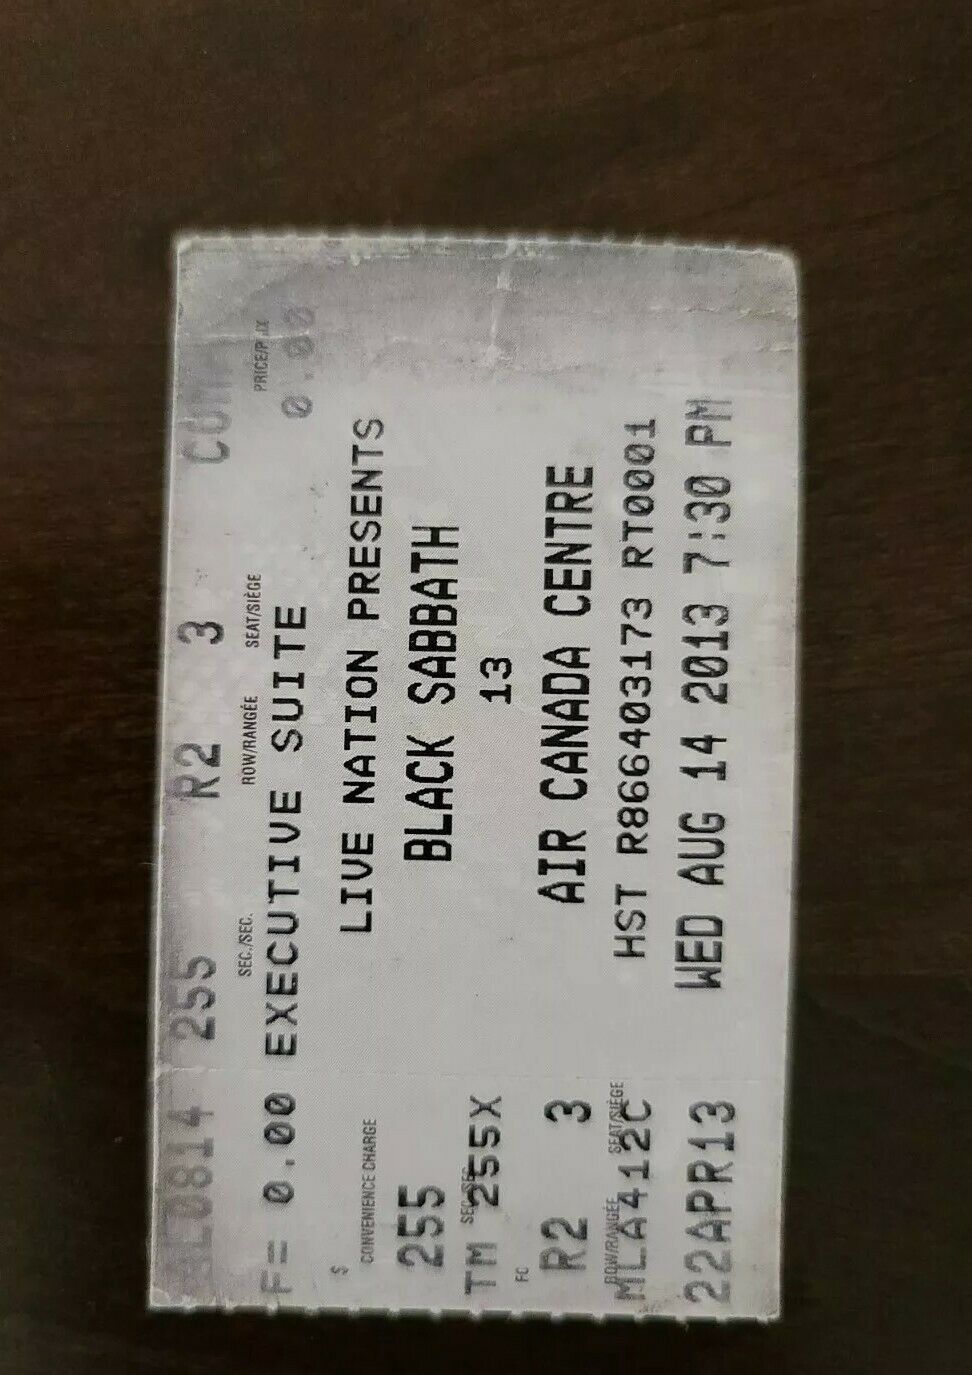 Black Sabbath 2013, Toronto Air Canada Centre Original Concert Ticket Stub